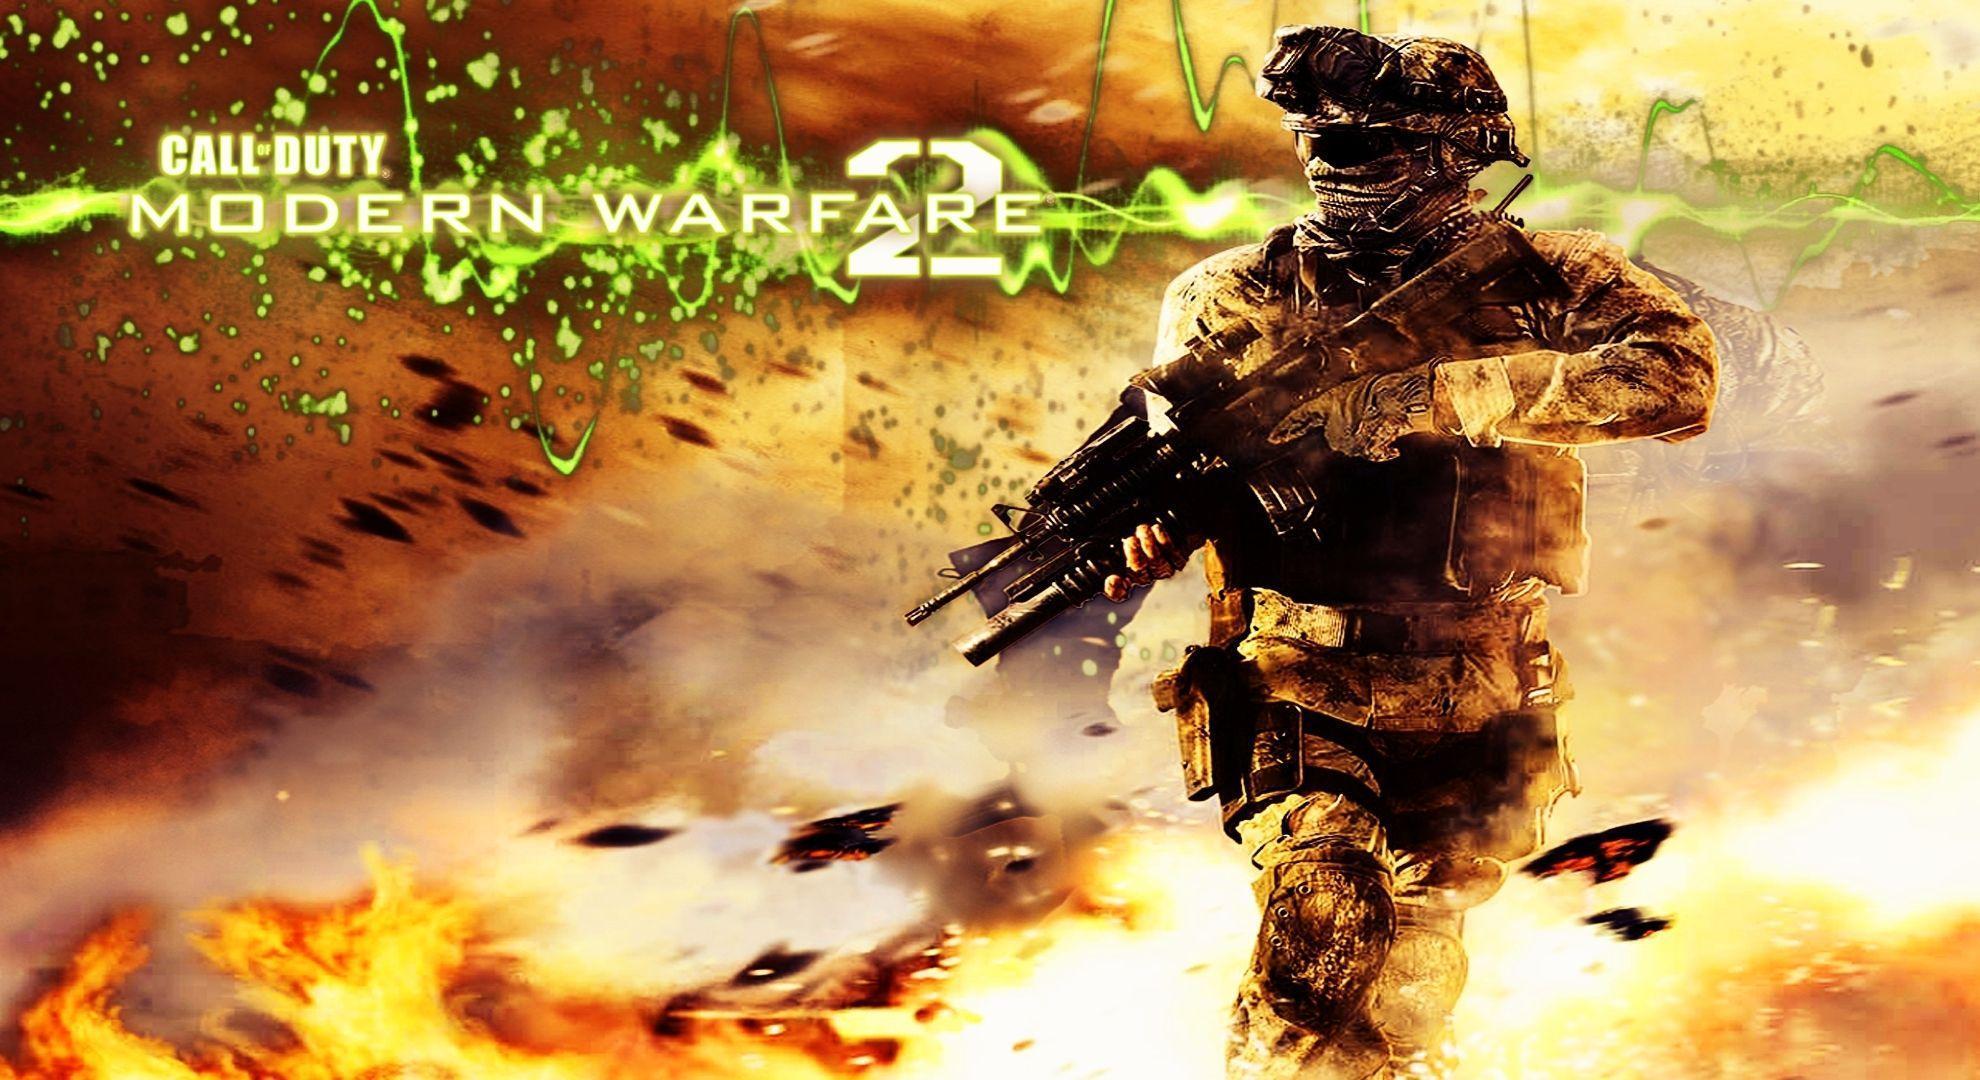 HD Call Of Duty Modern Warfare 2 Wallpaper and Photo. HD Games